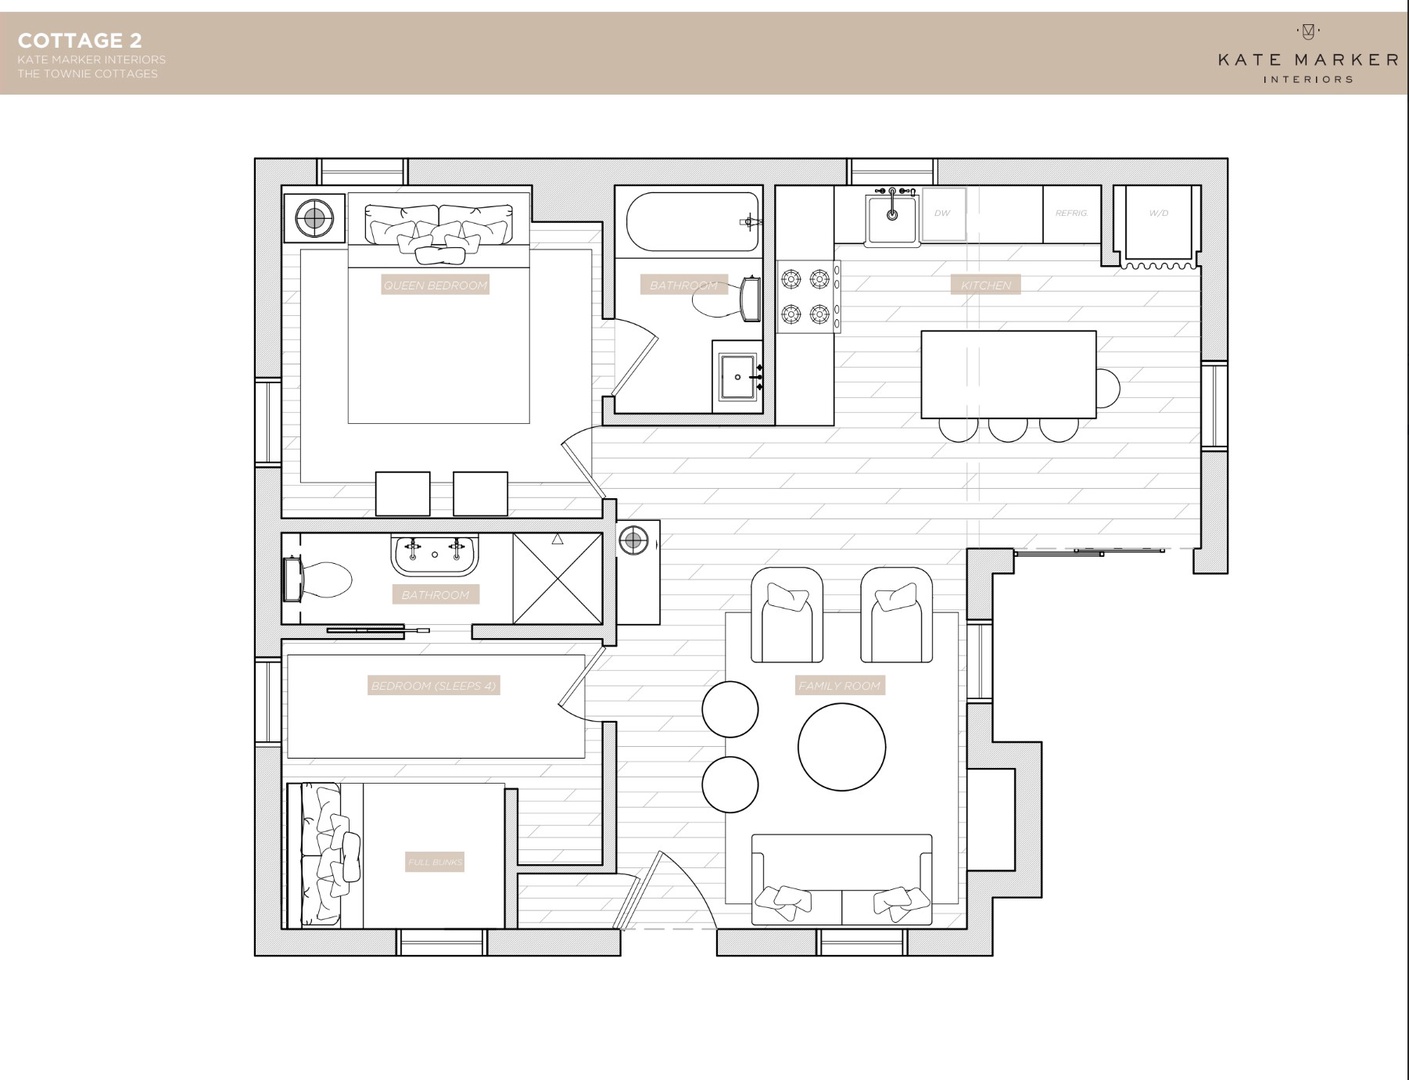 Townie Floor Plan - Cottage 2